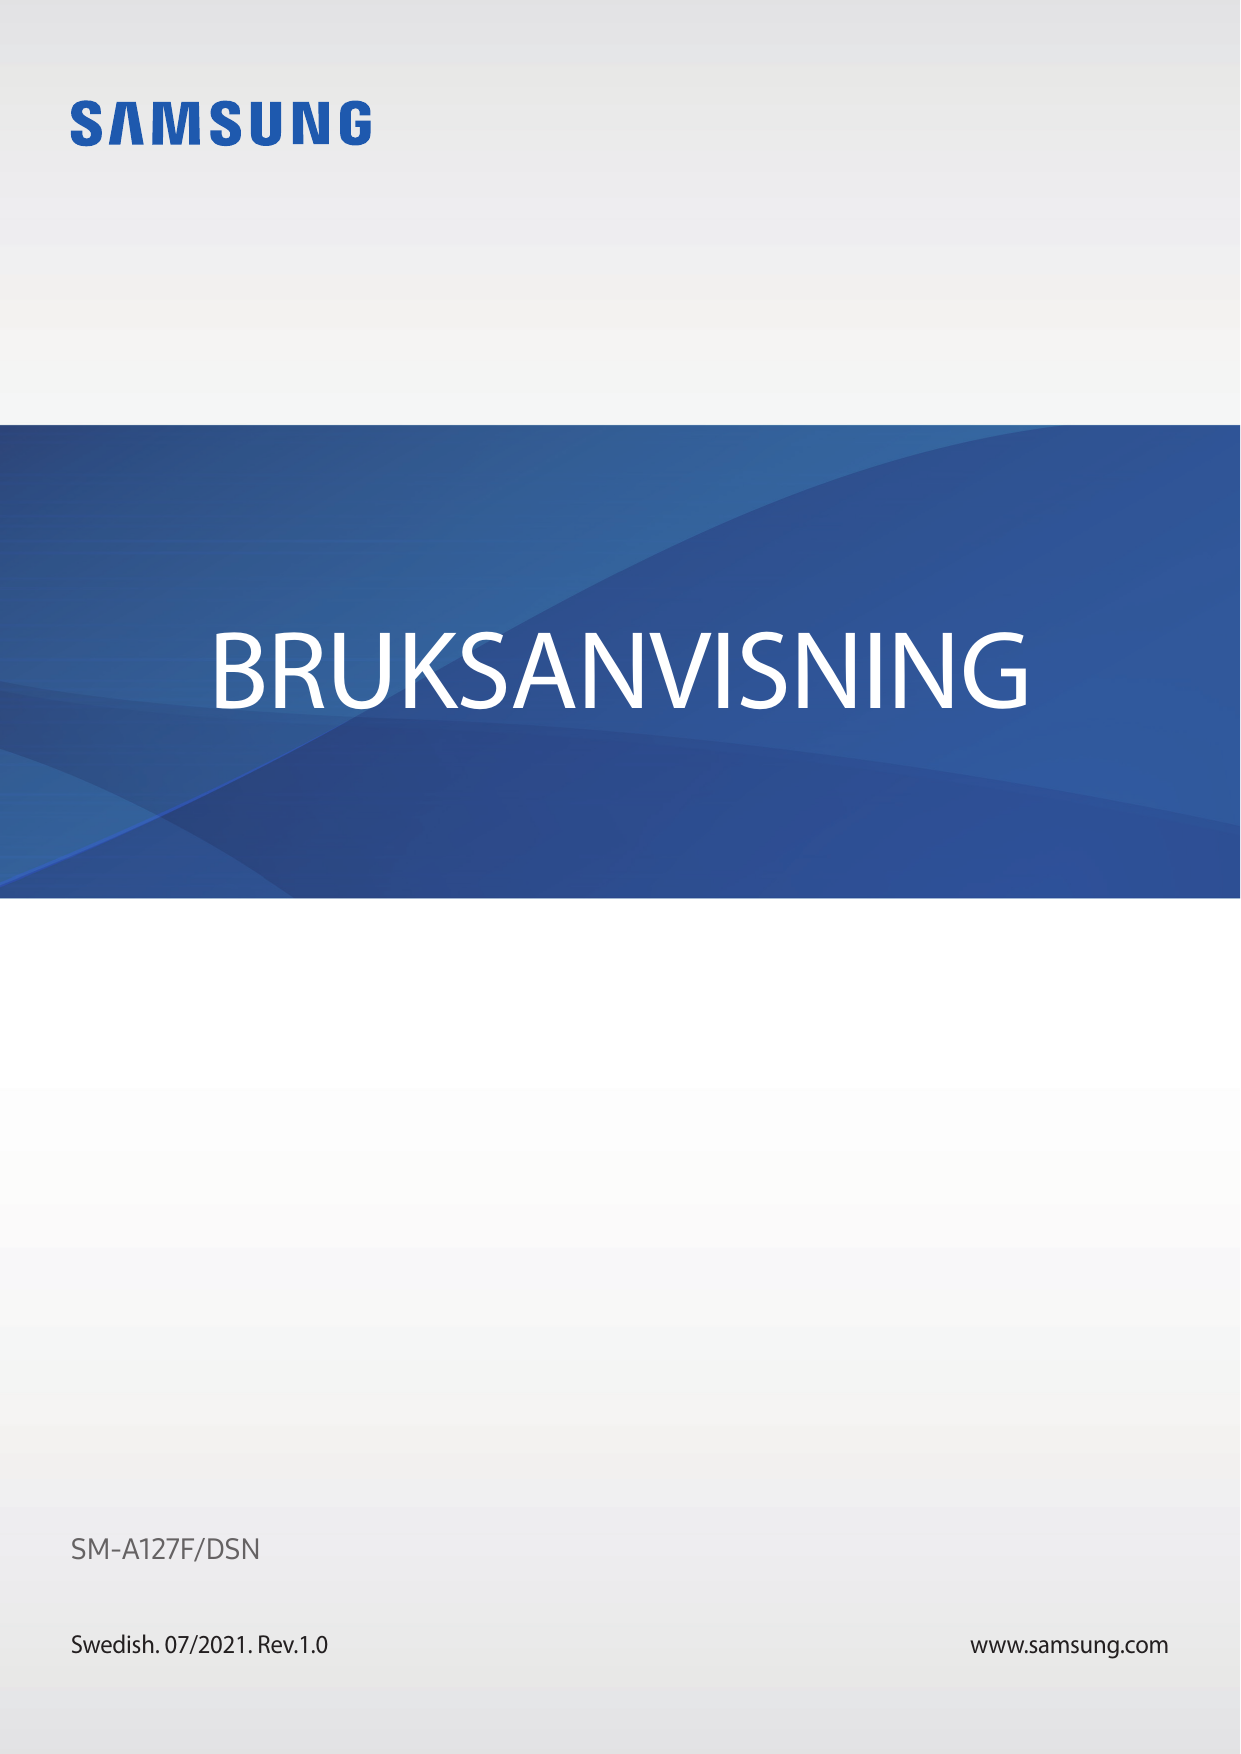 BRUKSANVISNINGSM-A127F/DSNSwedish. 07/2021. Rev.1.0www.samsung.com